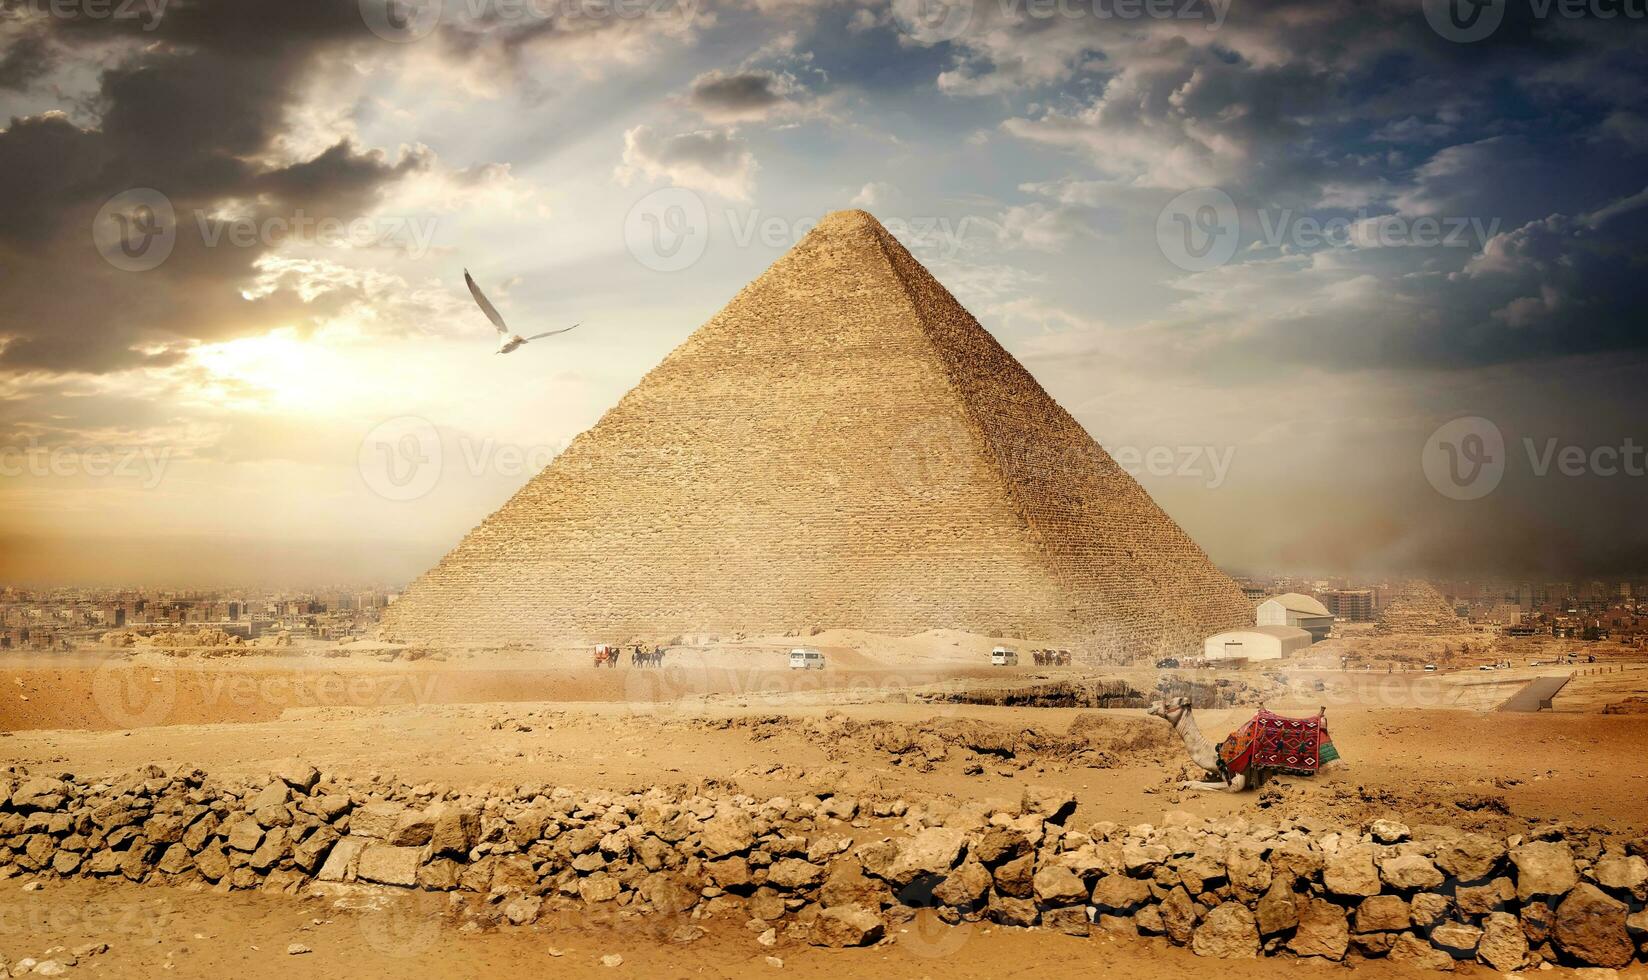 Big bird over pyramids photo